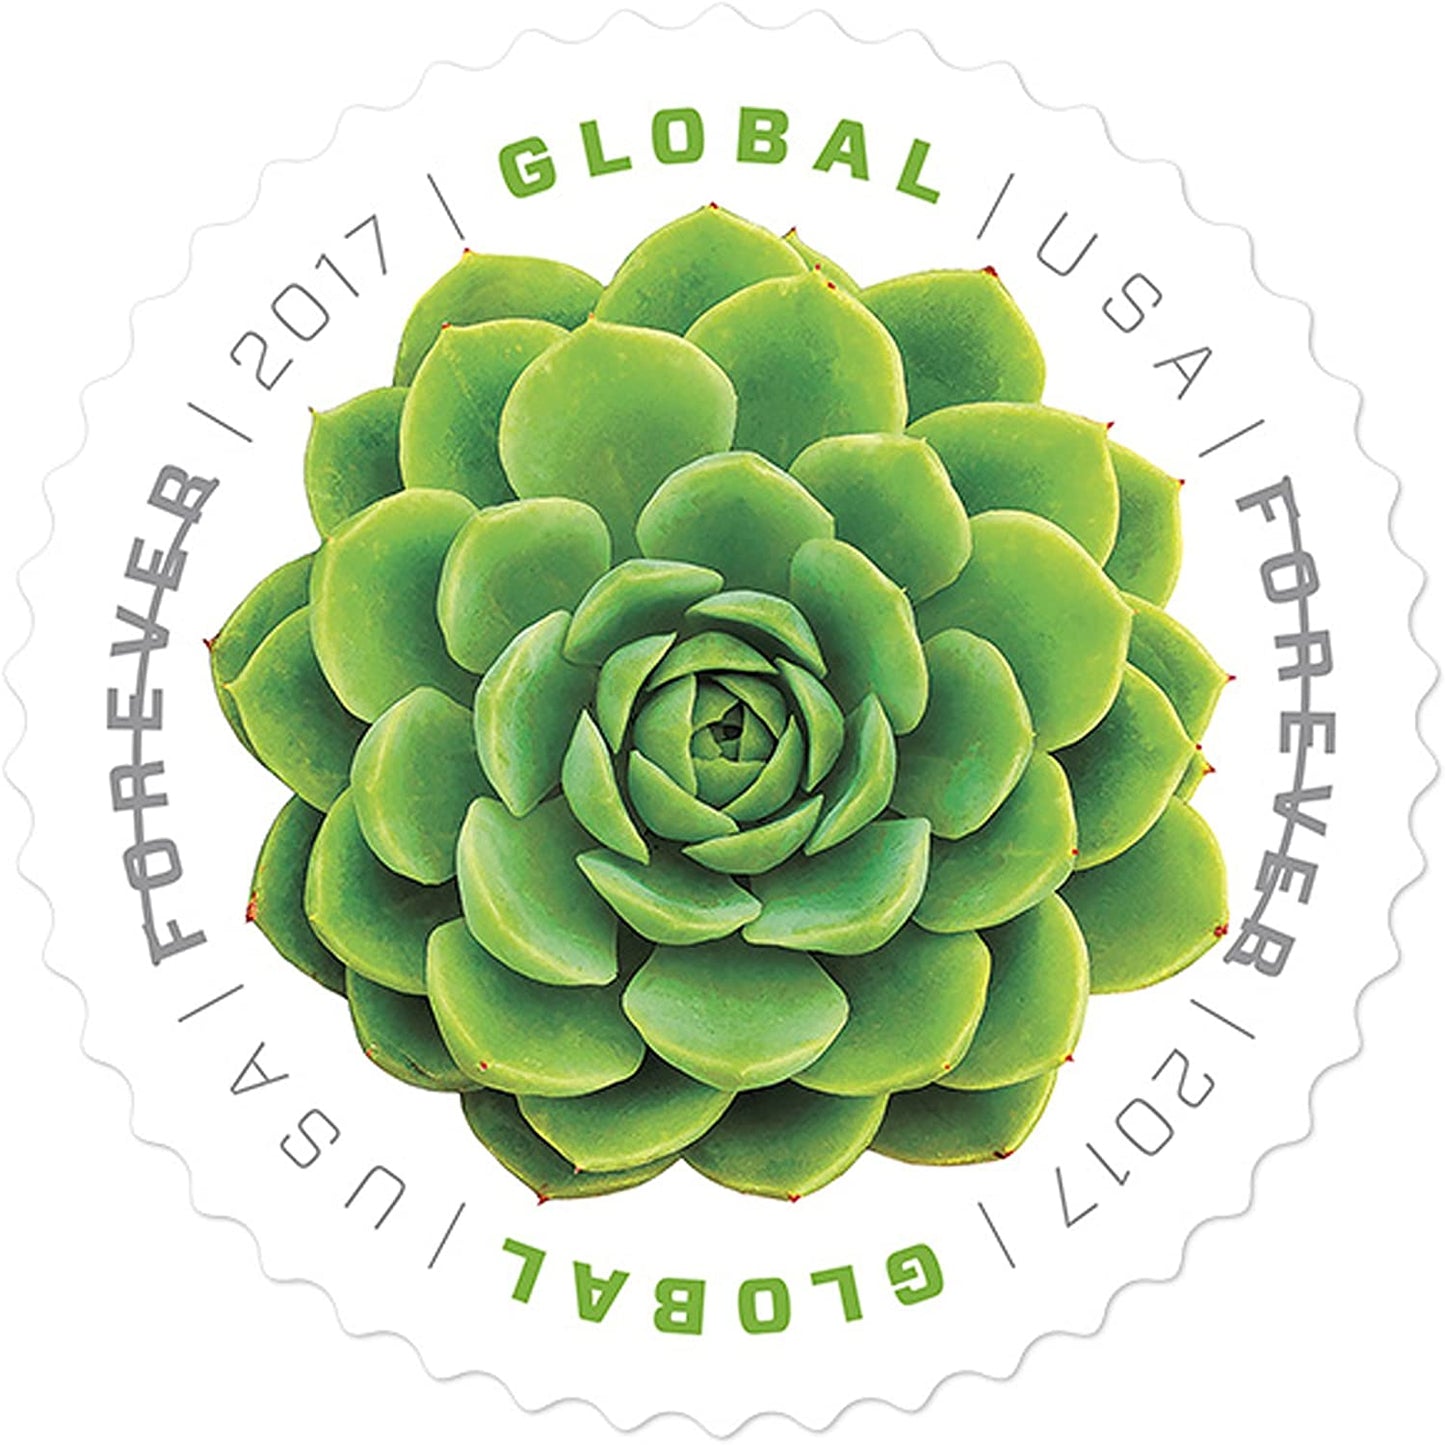 (2017) USPS Global Green Succulent International Forever Stamps